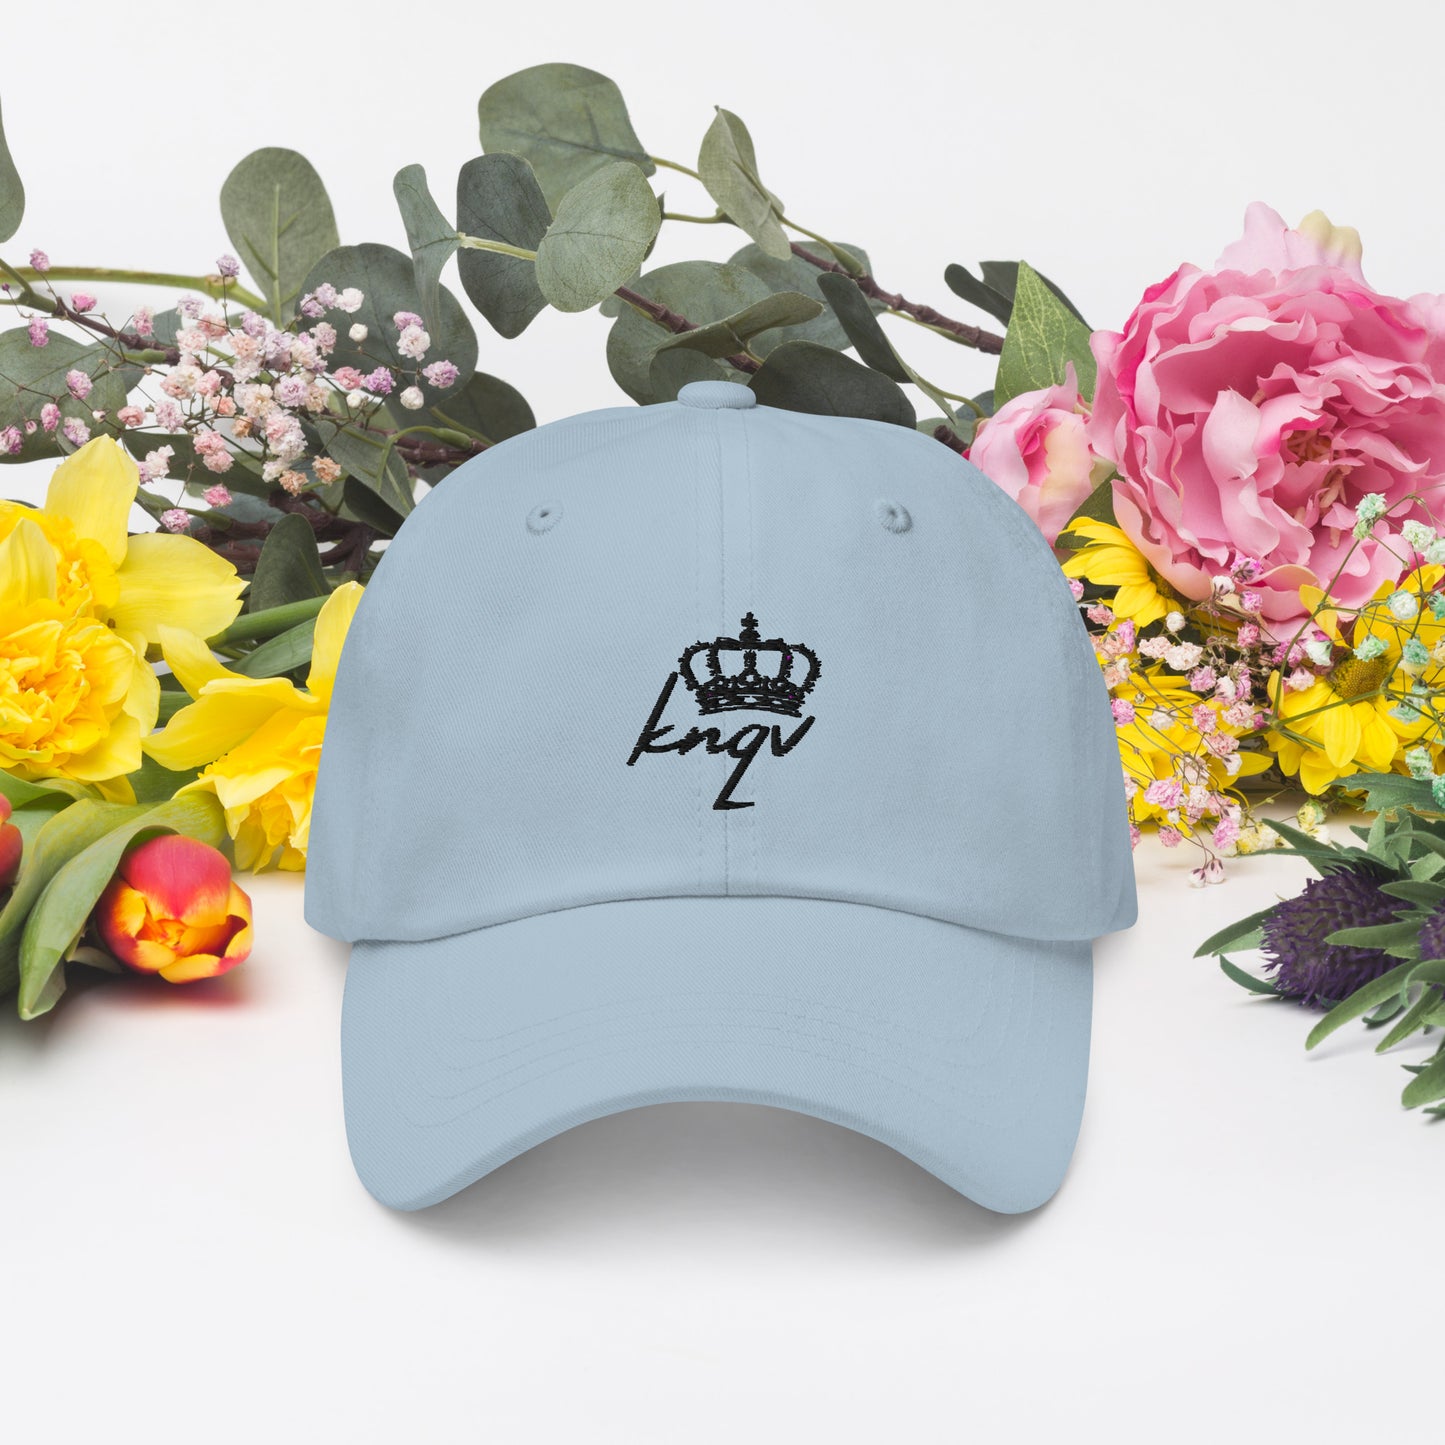 Knqv Crown Brand Original Mom/Pops Hat